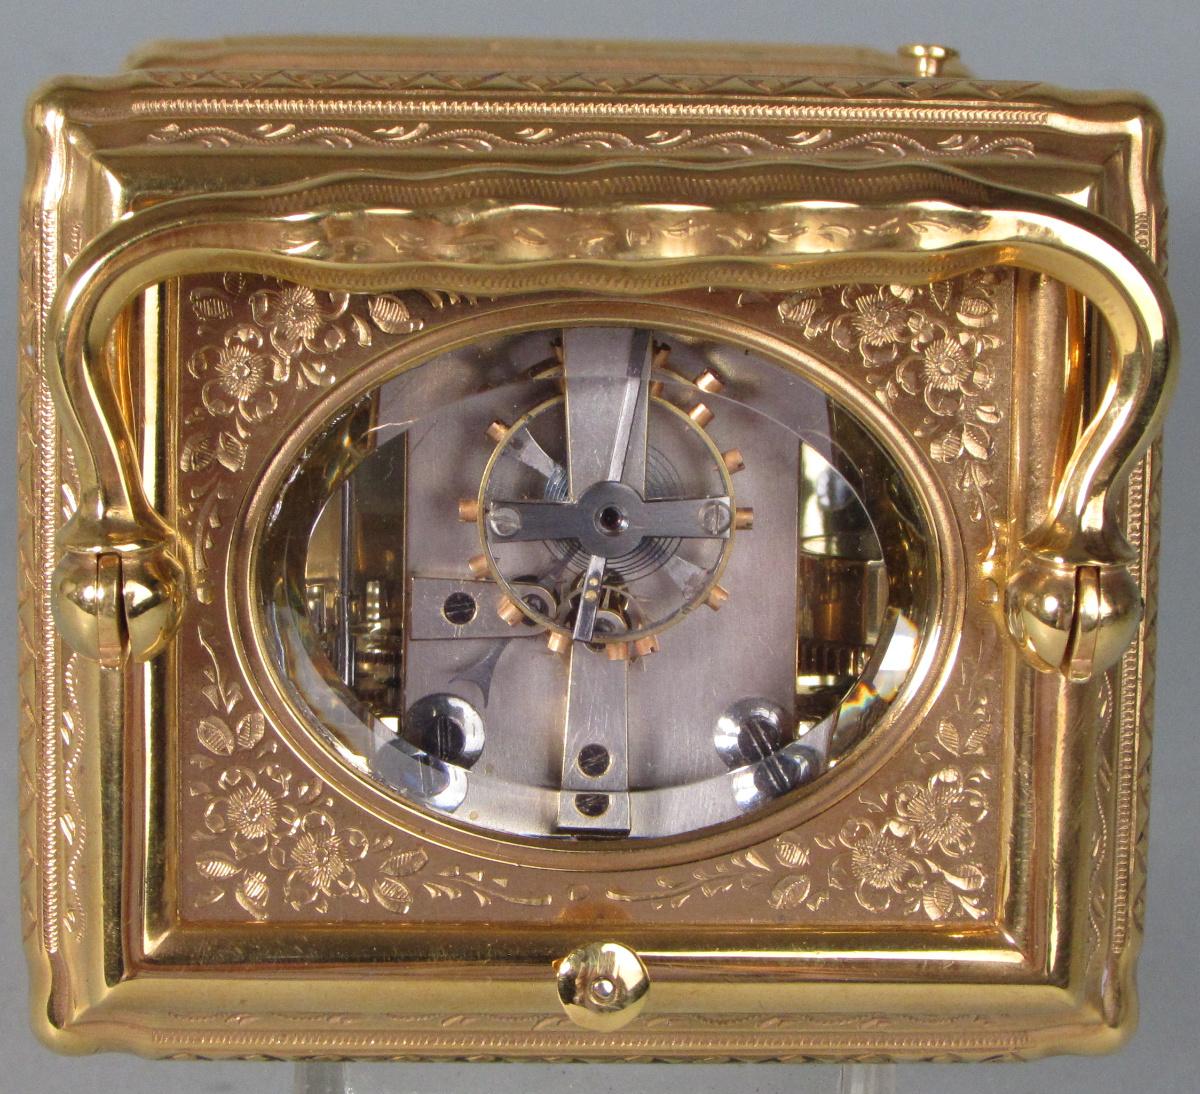 Drocourt engraved gorge carriage clock escapement